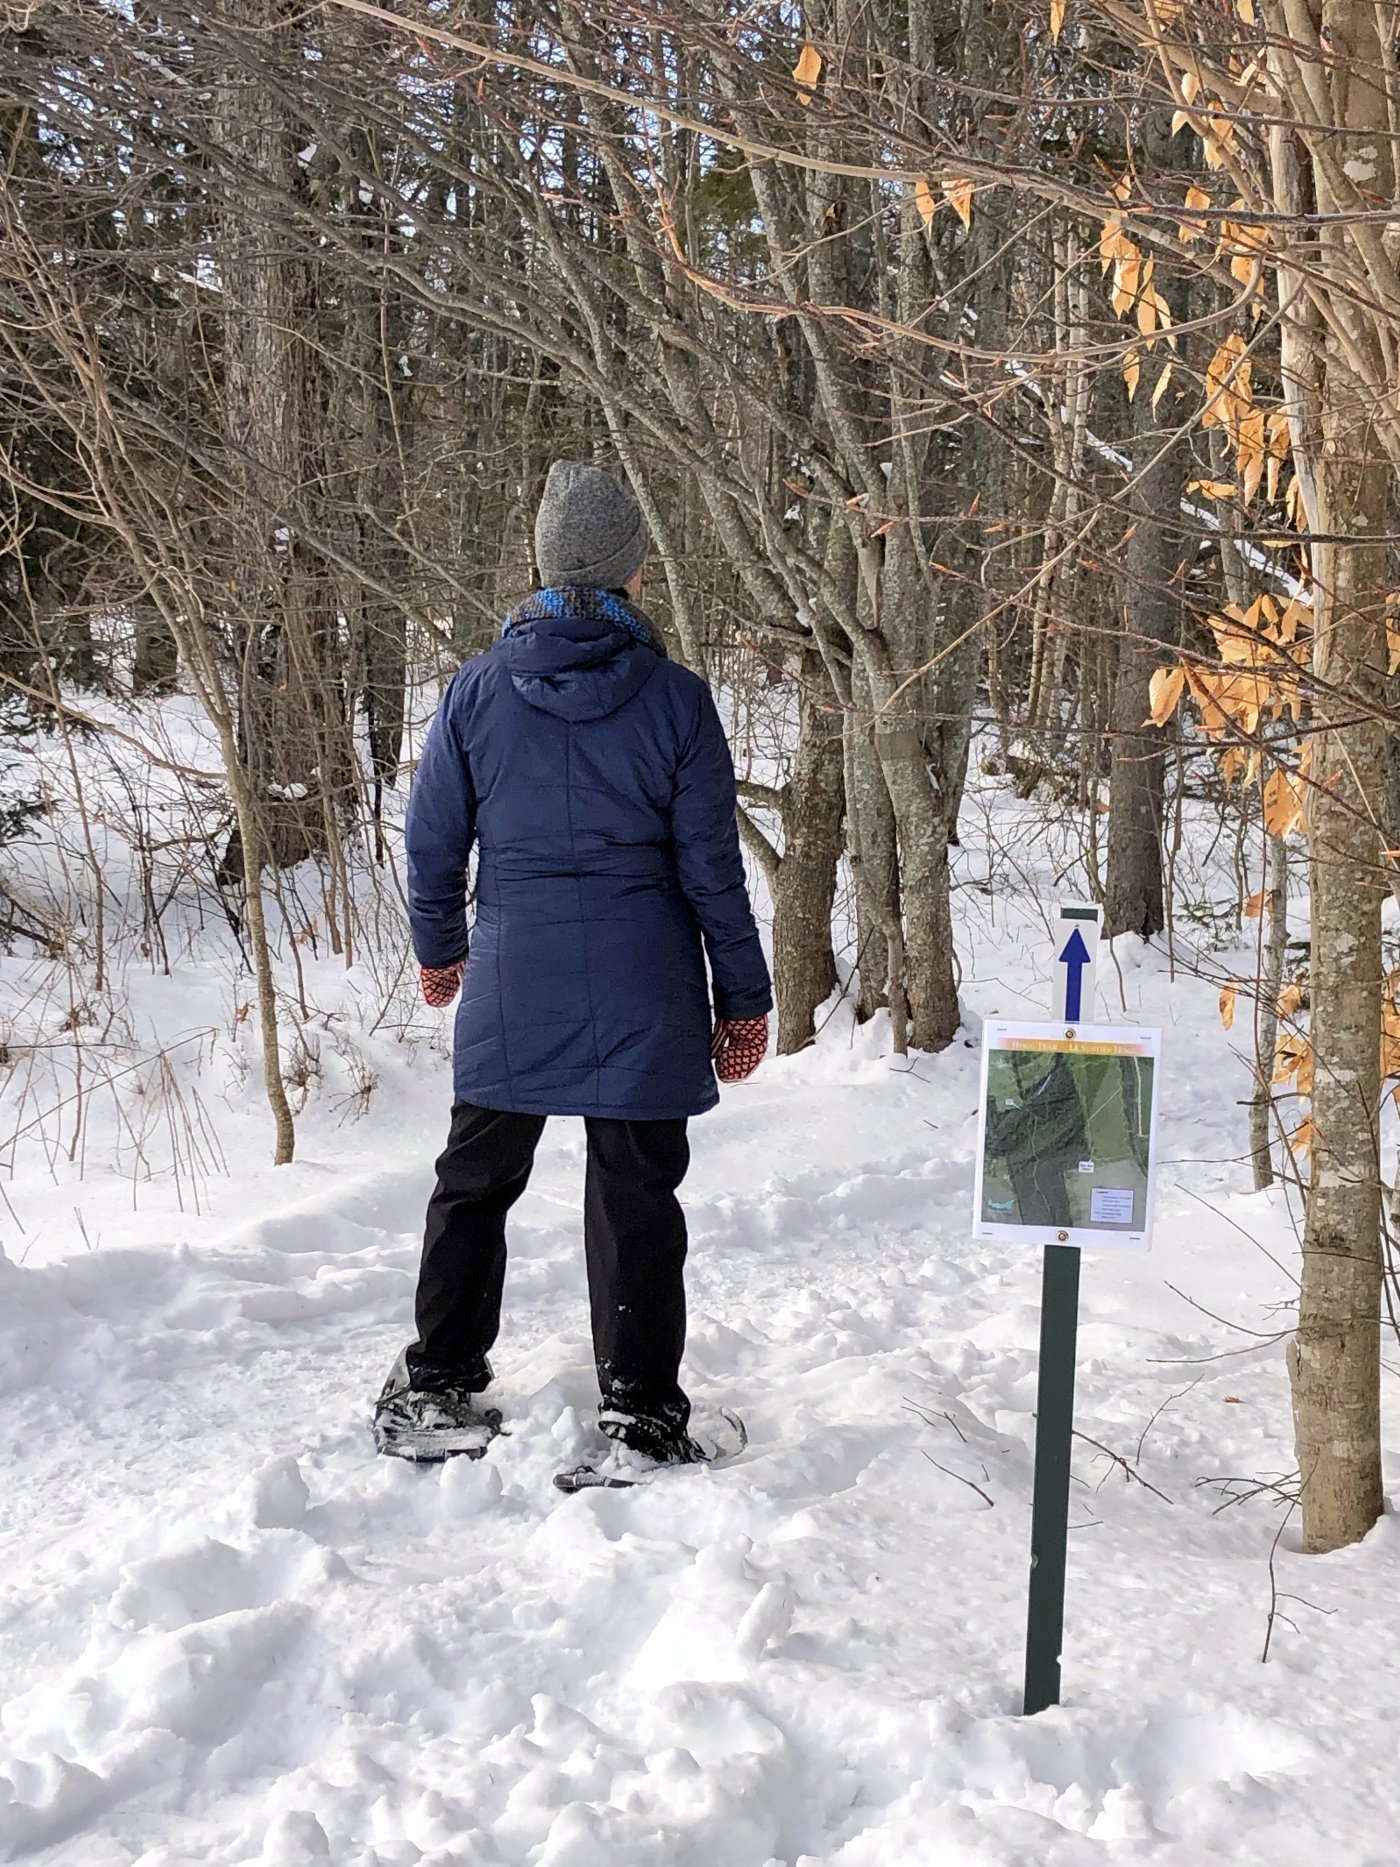 Individual entering winter trail on snowshoes, Kensington